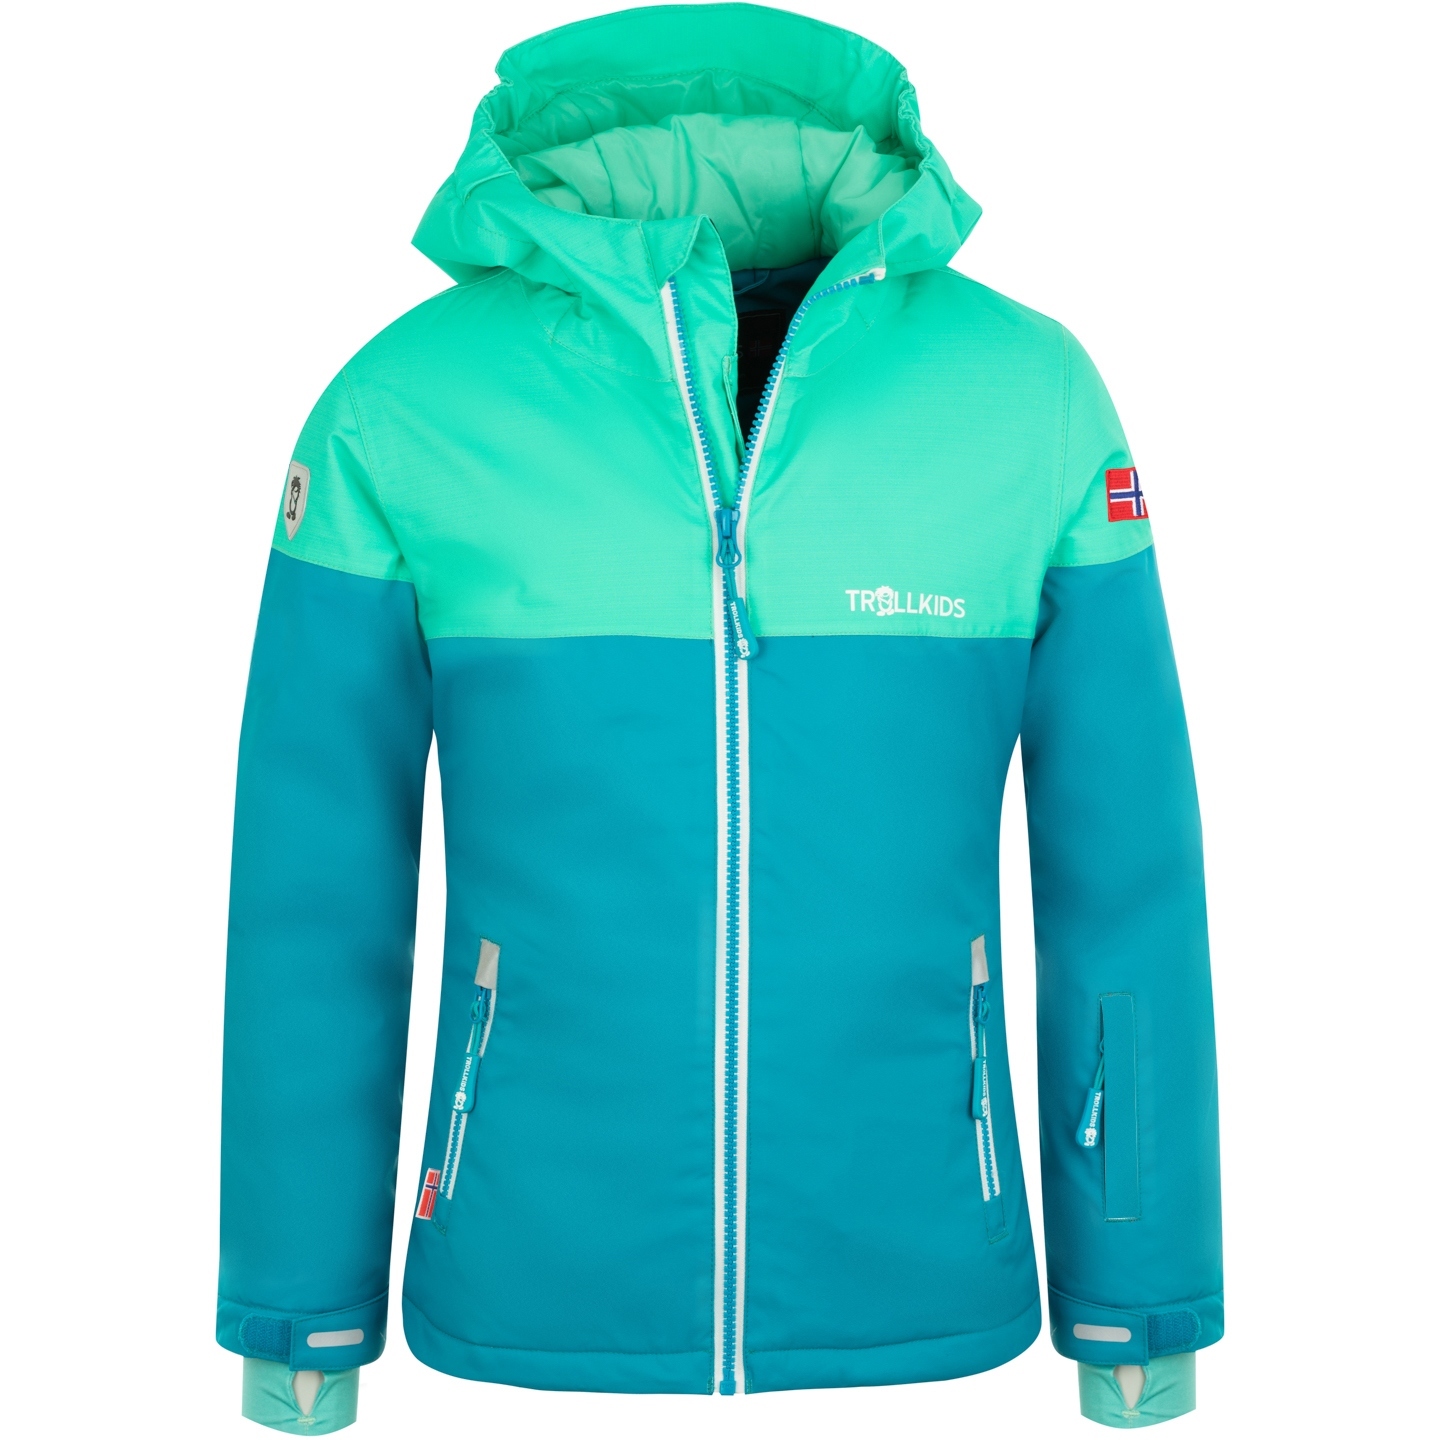 Productfoto van Trollkids Hallingdal Ski Jacket Girls - Light Petrol/Dark Mint/White